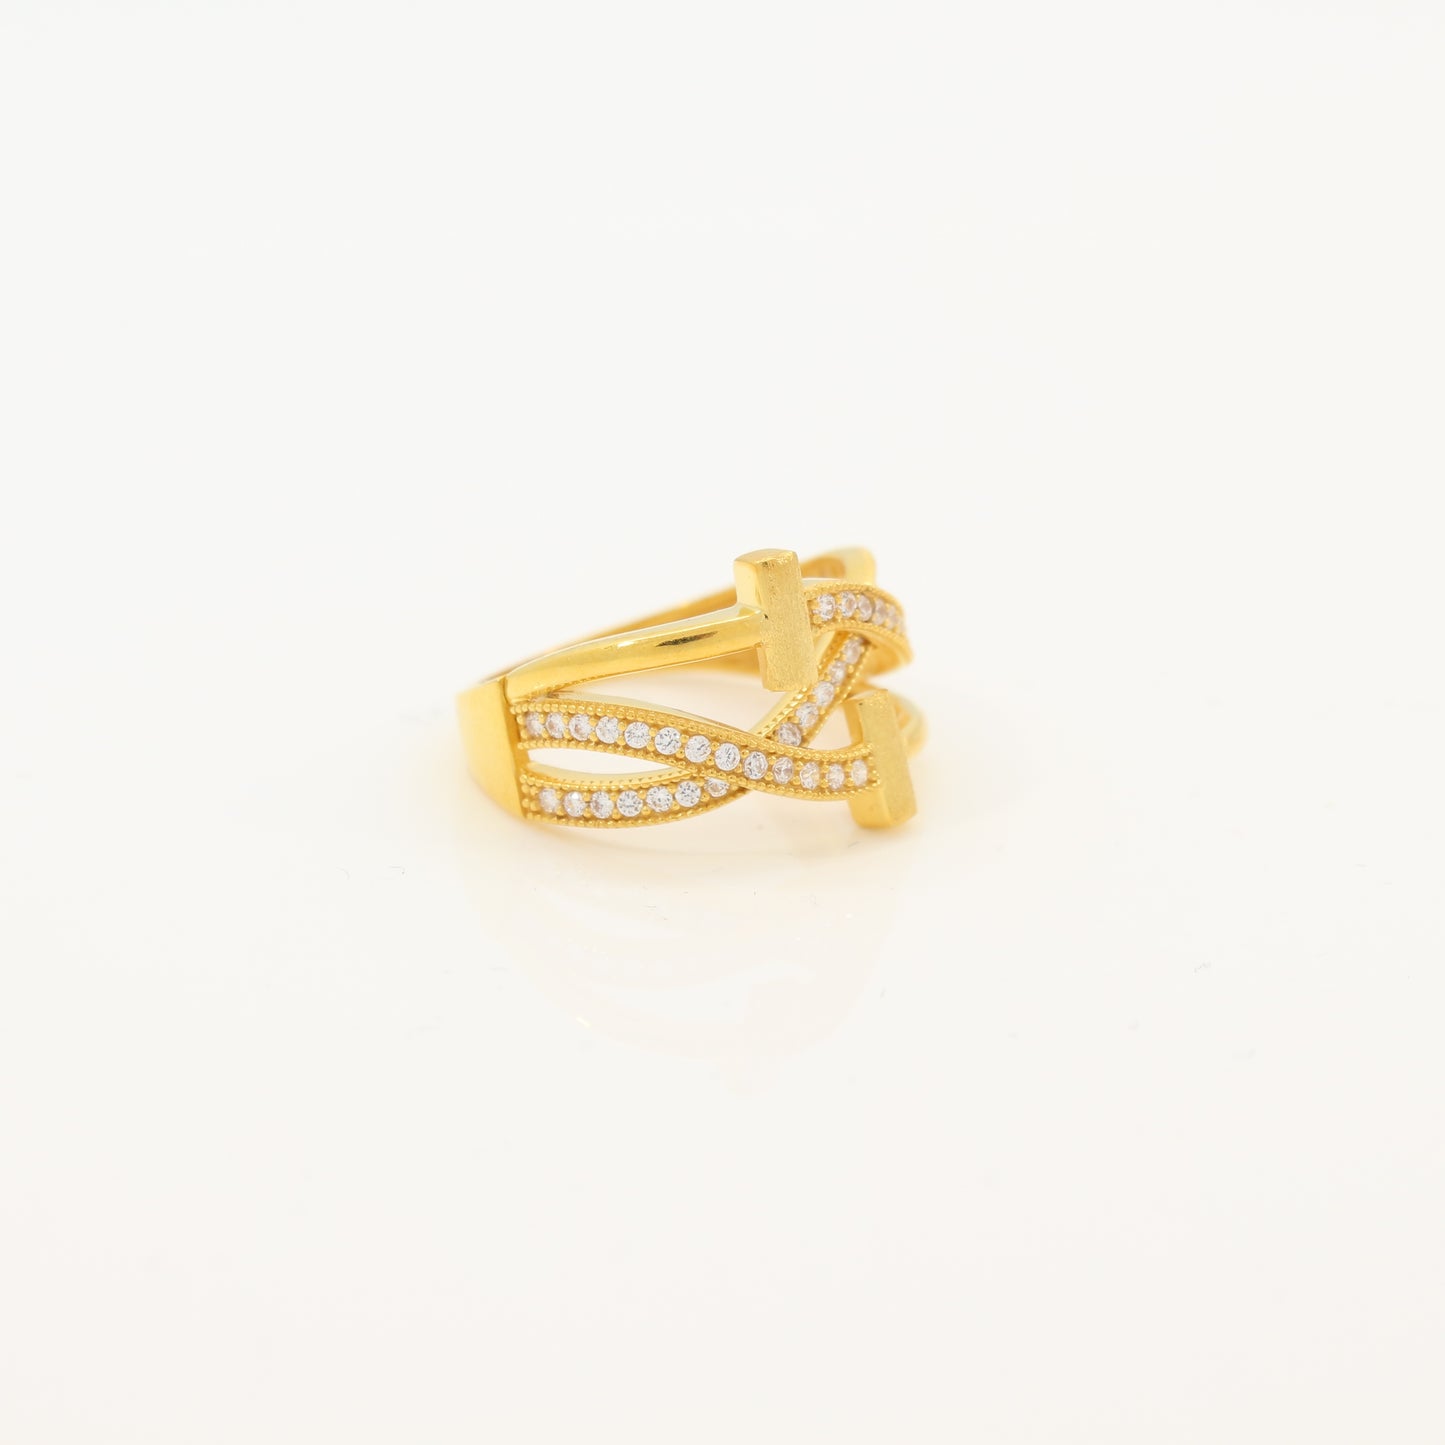 21K Gold Ring (size 8.5)